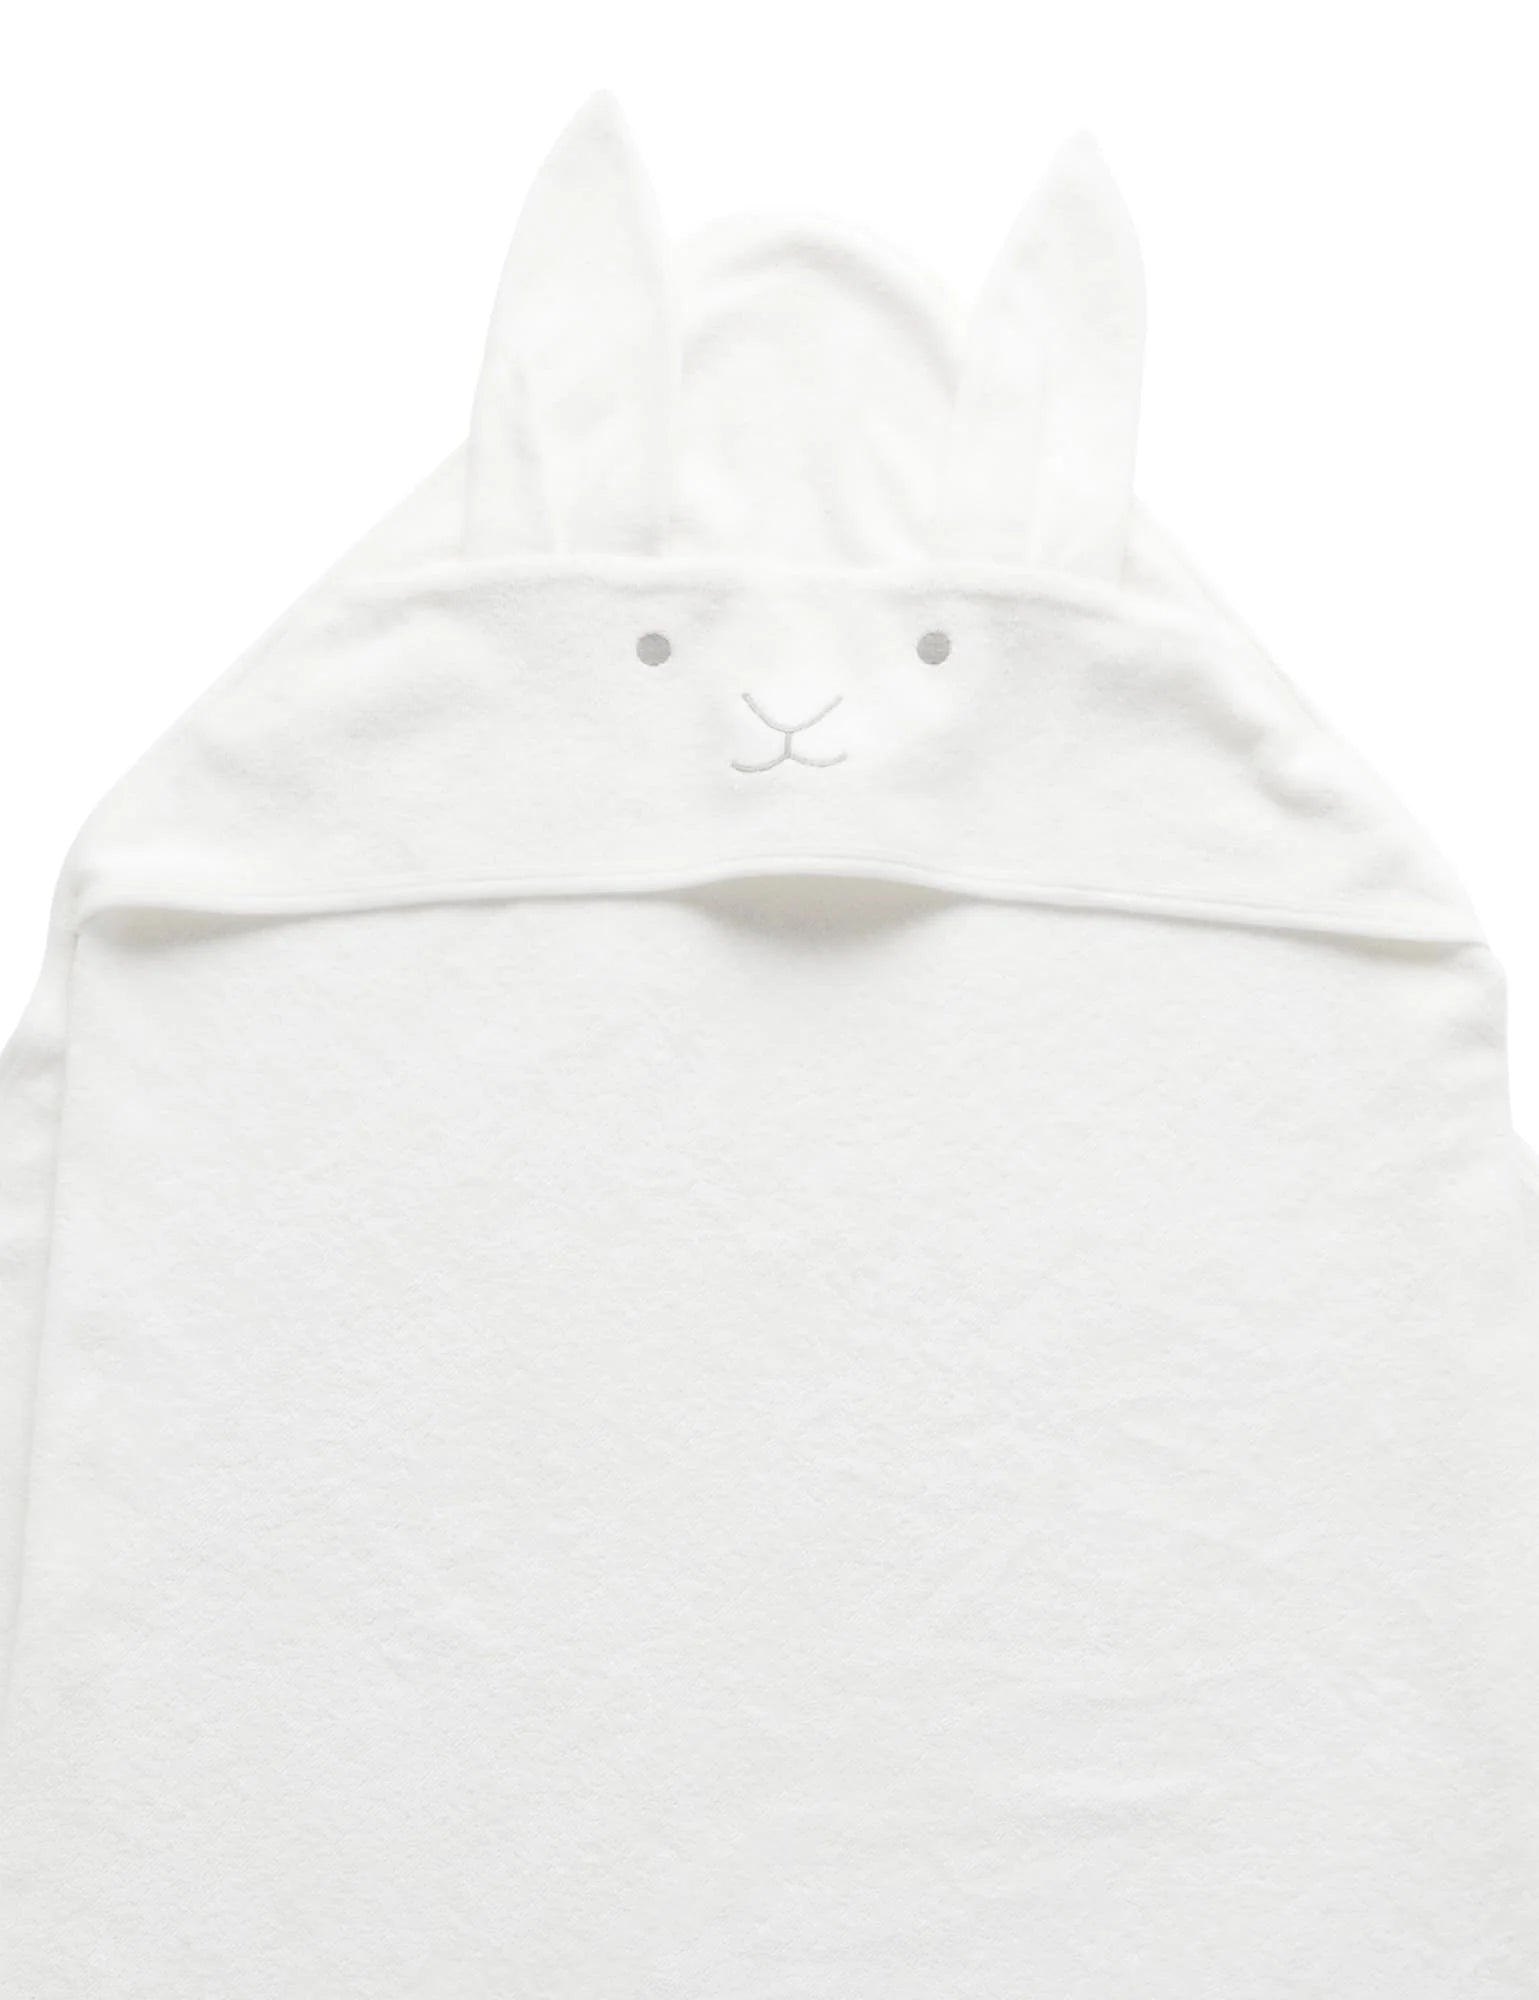 Purebaby Hooded Towel - Vanilla Bunny